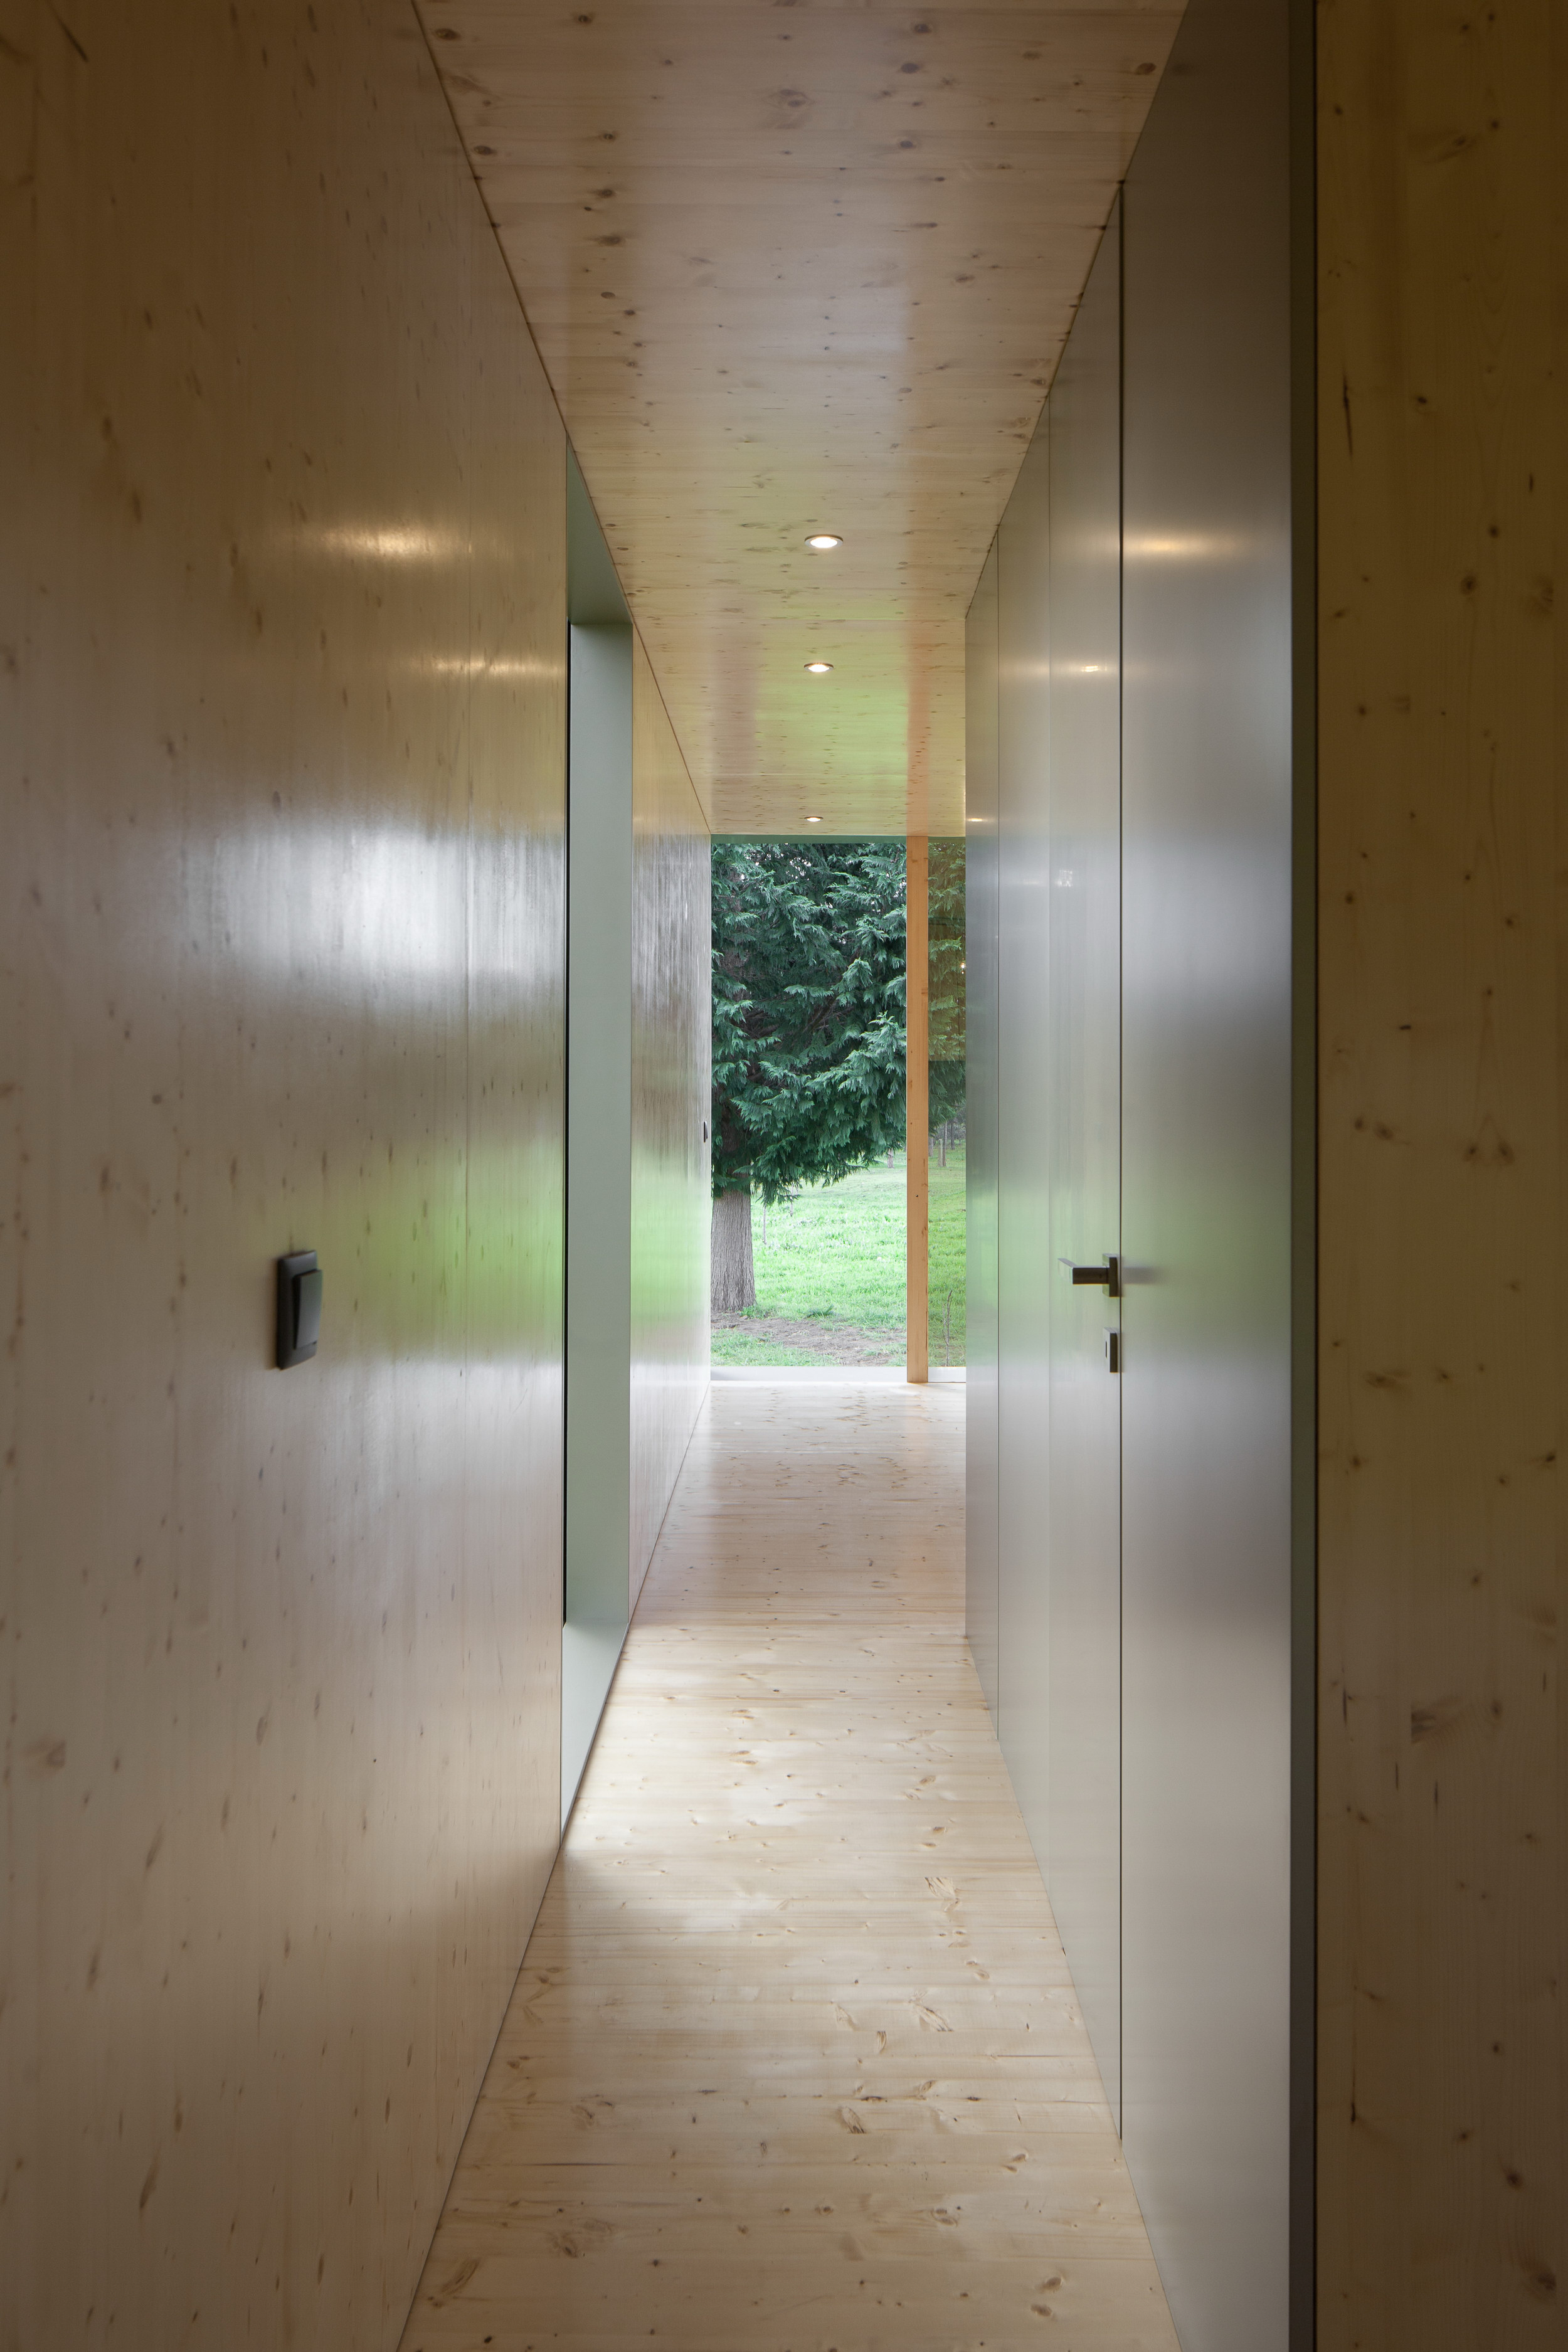 MIMA Light | Prefabricated Modular Home by MIMA Architects